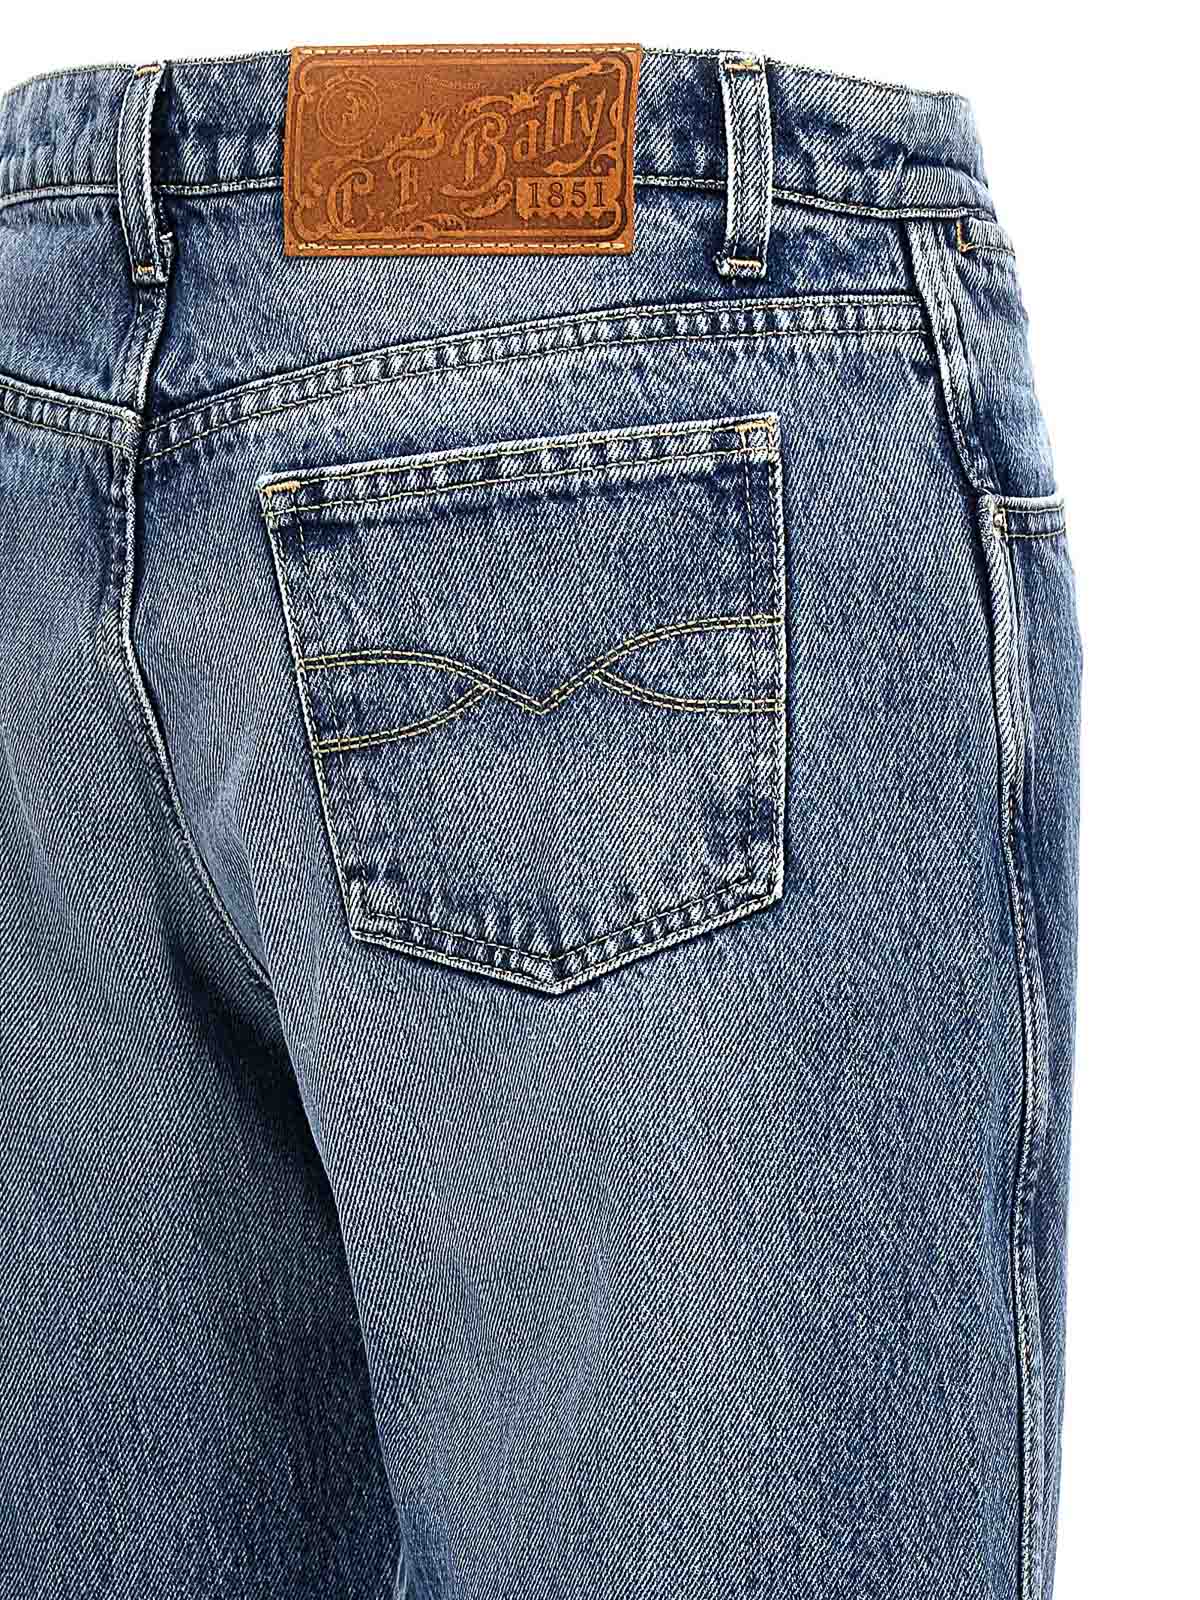 Coats Denim - Sewing Thread & Zips for Jeans & Denim Garments | Coats -  Coats